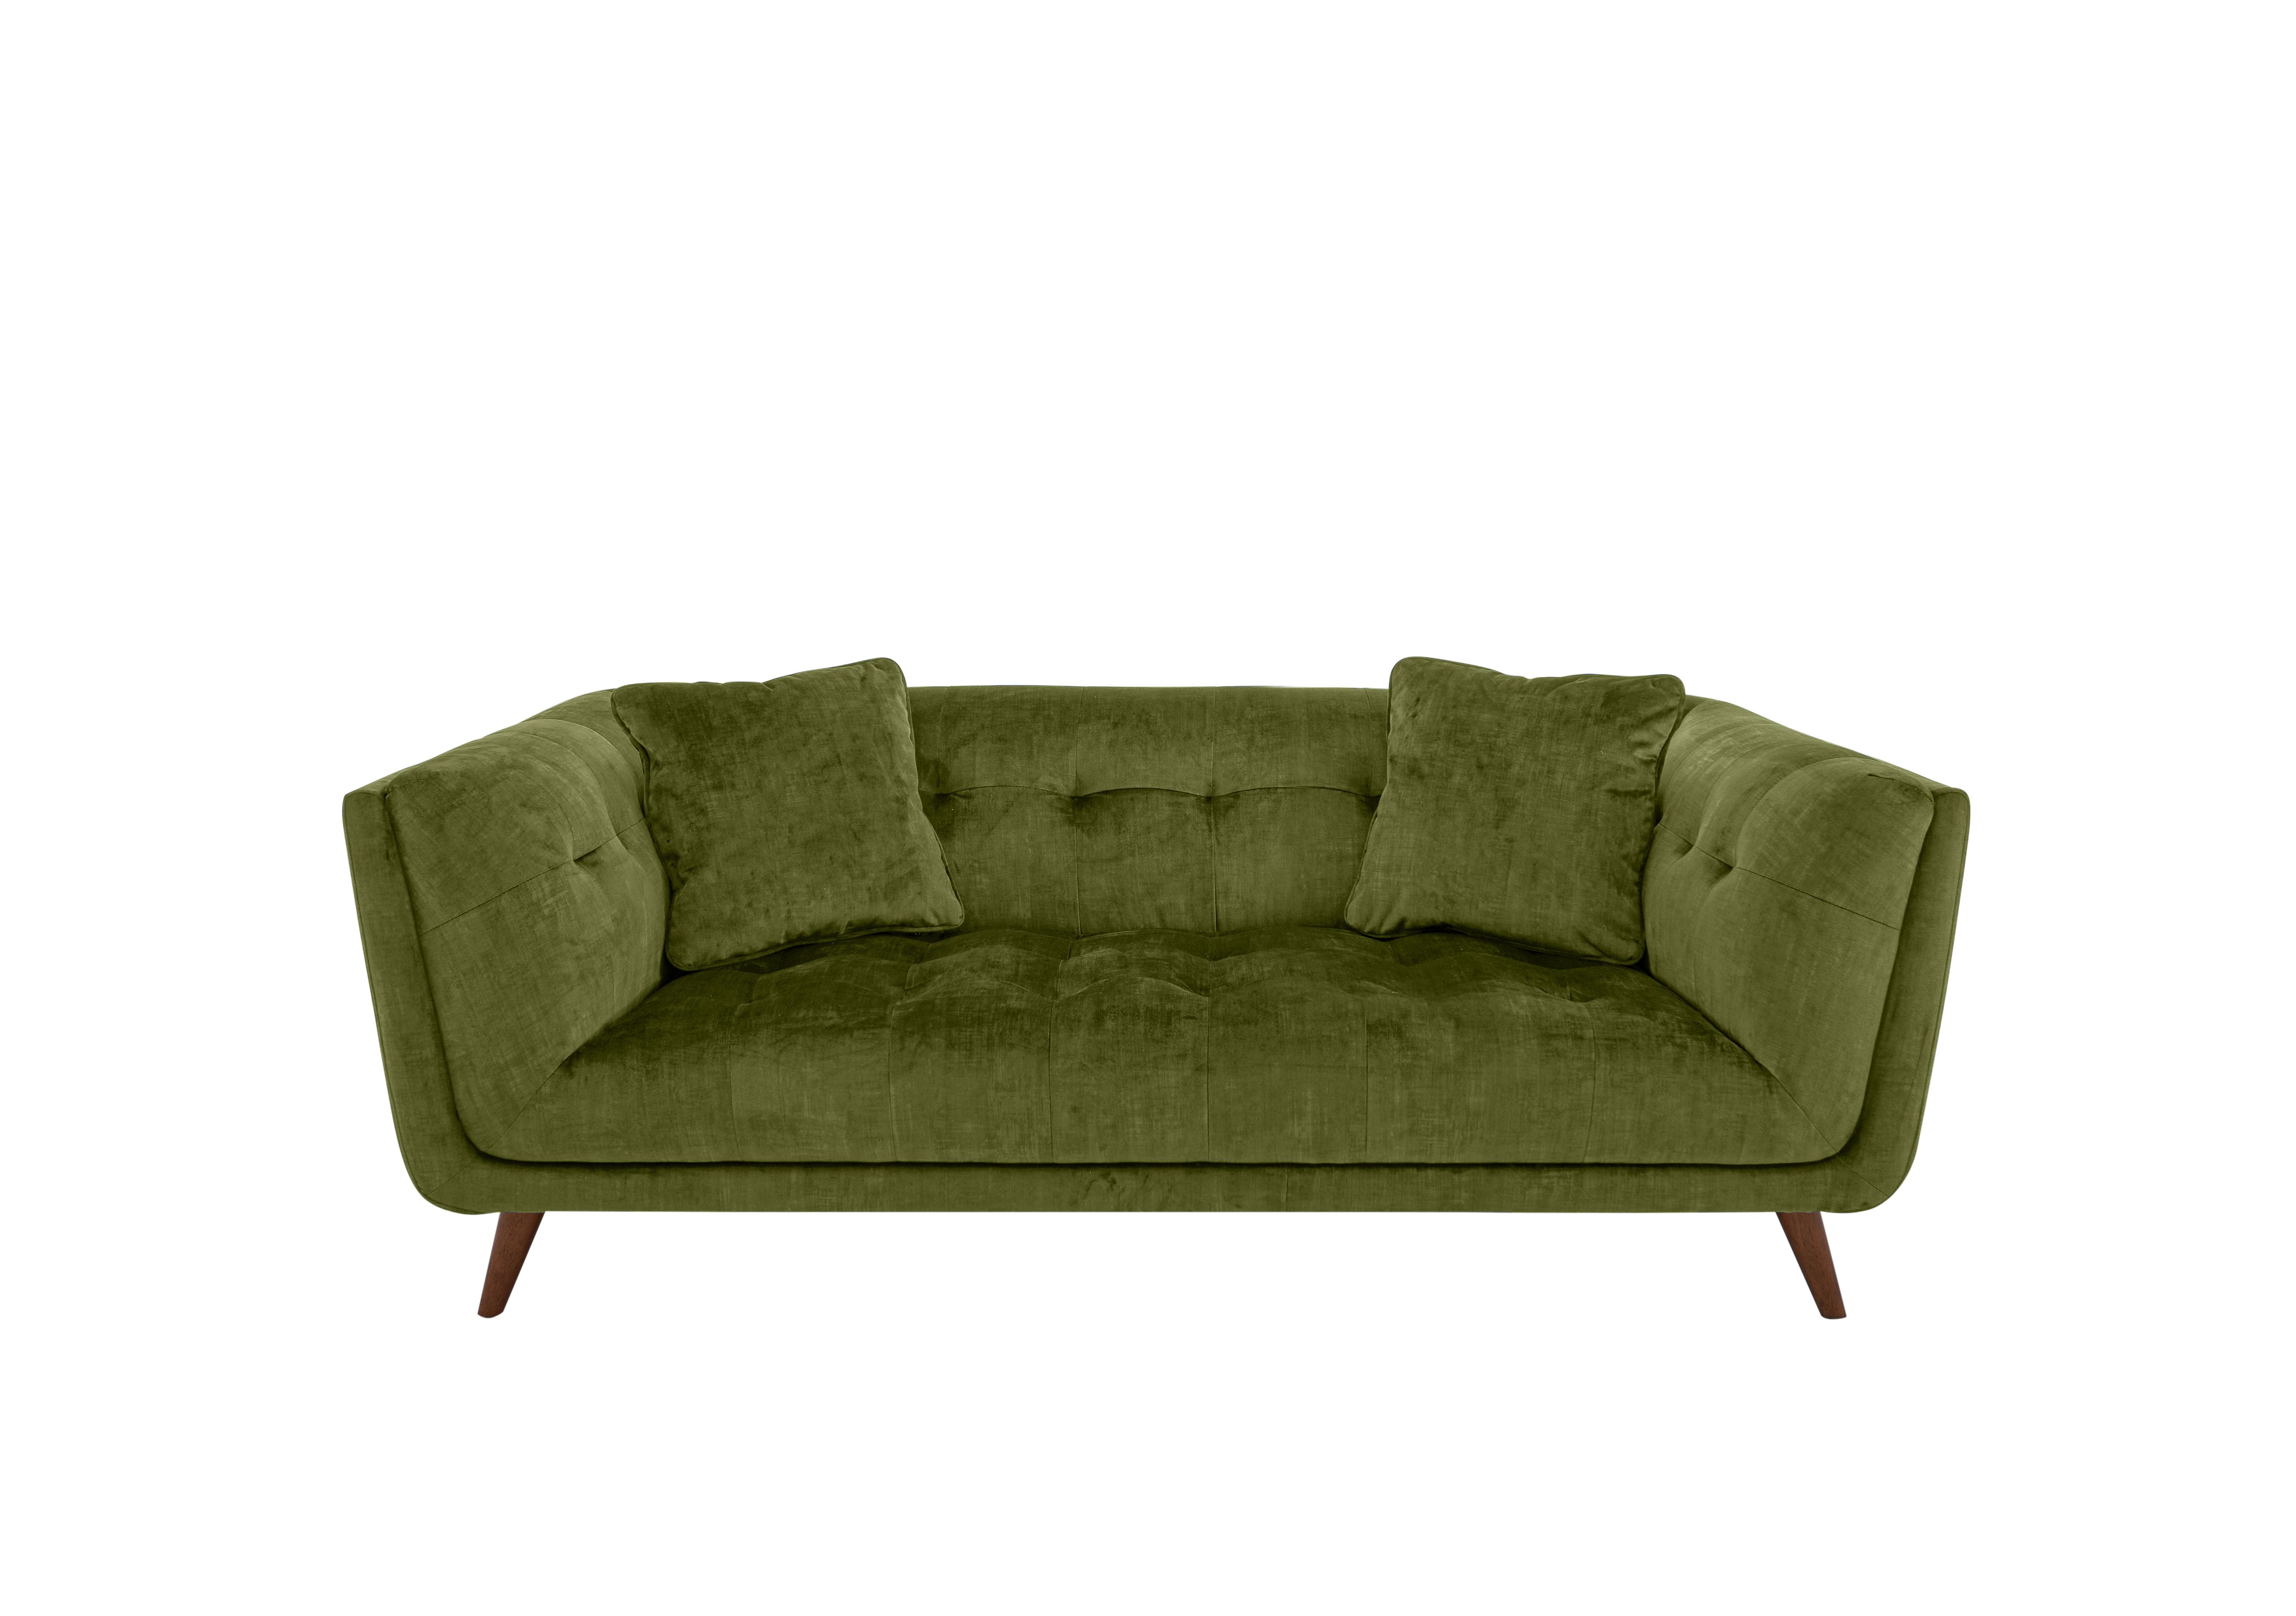 Rene Large 2 Seater Fabric Sofa in 52003 Heritage Olive Wa Ft on Furniture Village